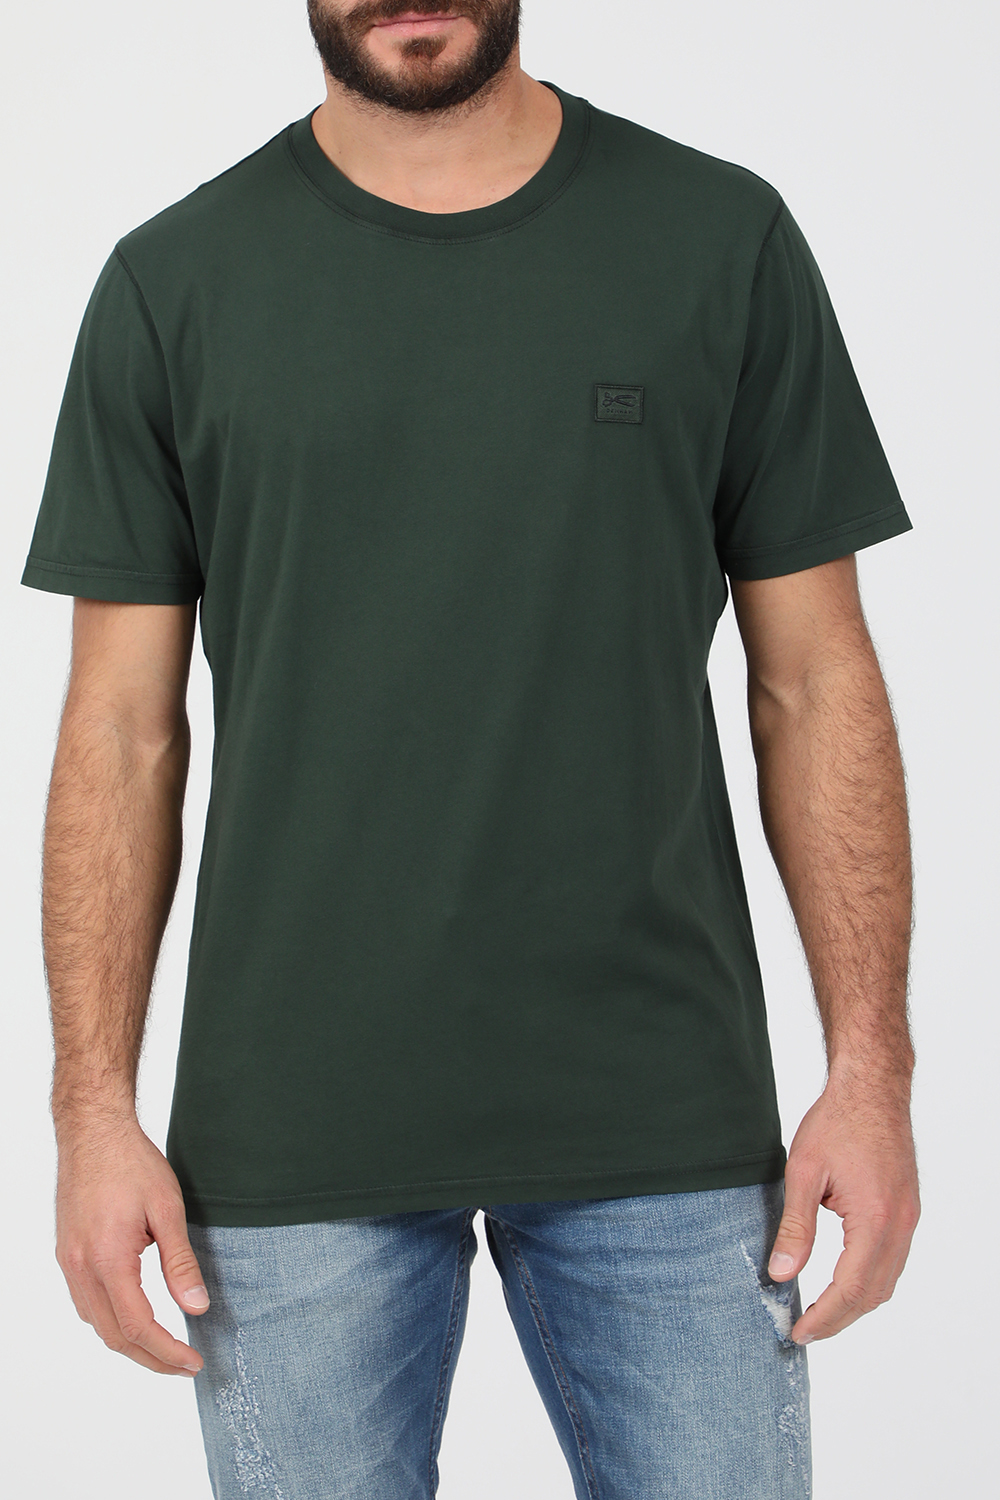 DENHAM – Ανδρικο t-shirt DENHAM APPLIQ πρασινο